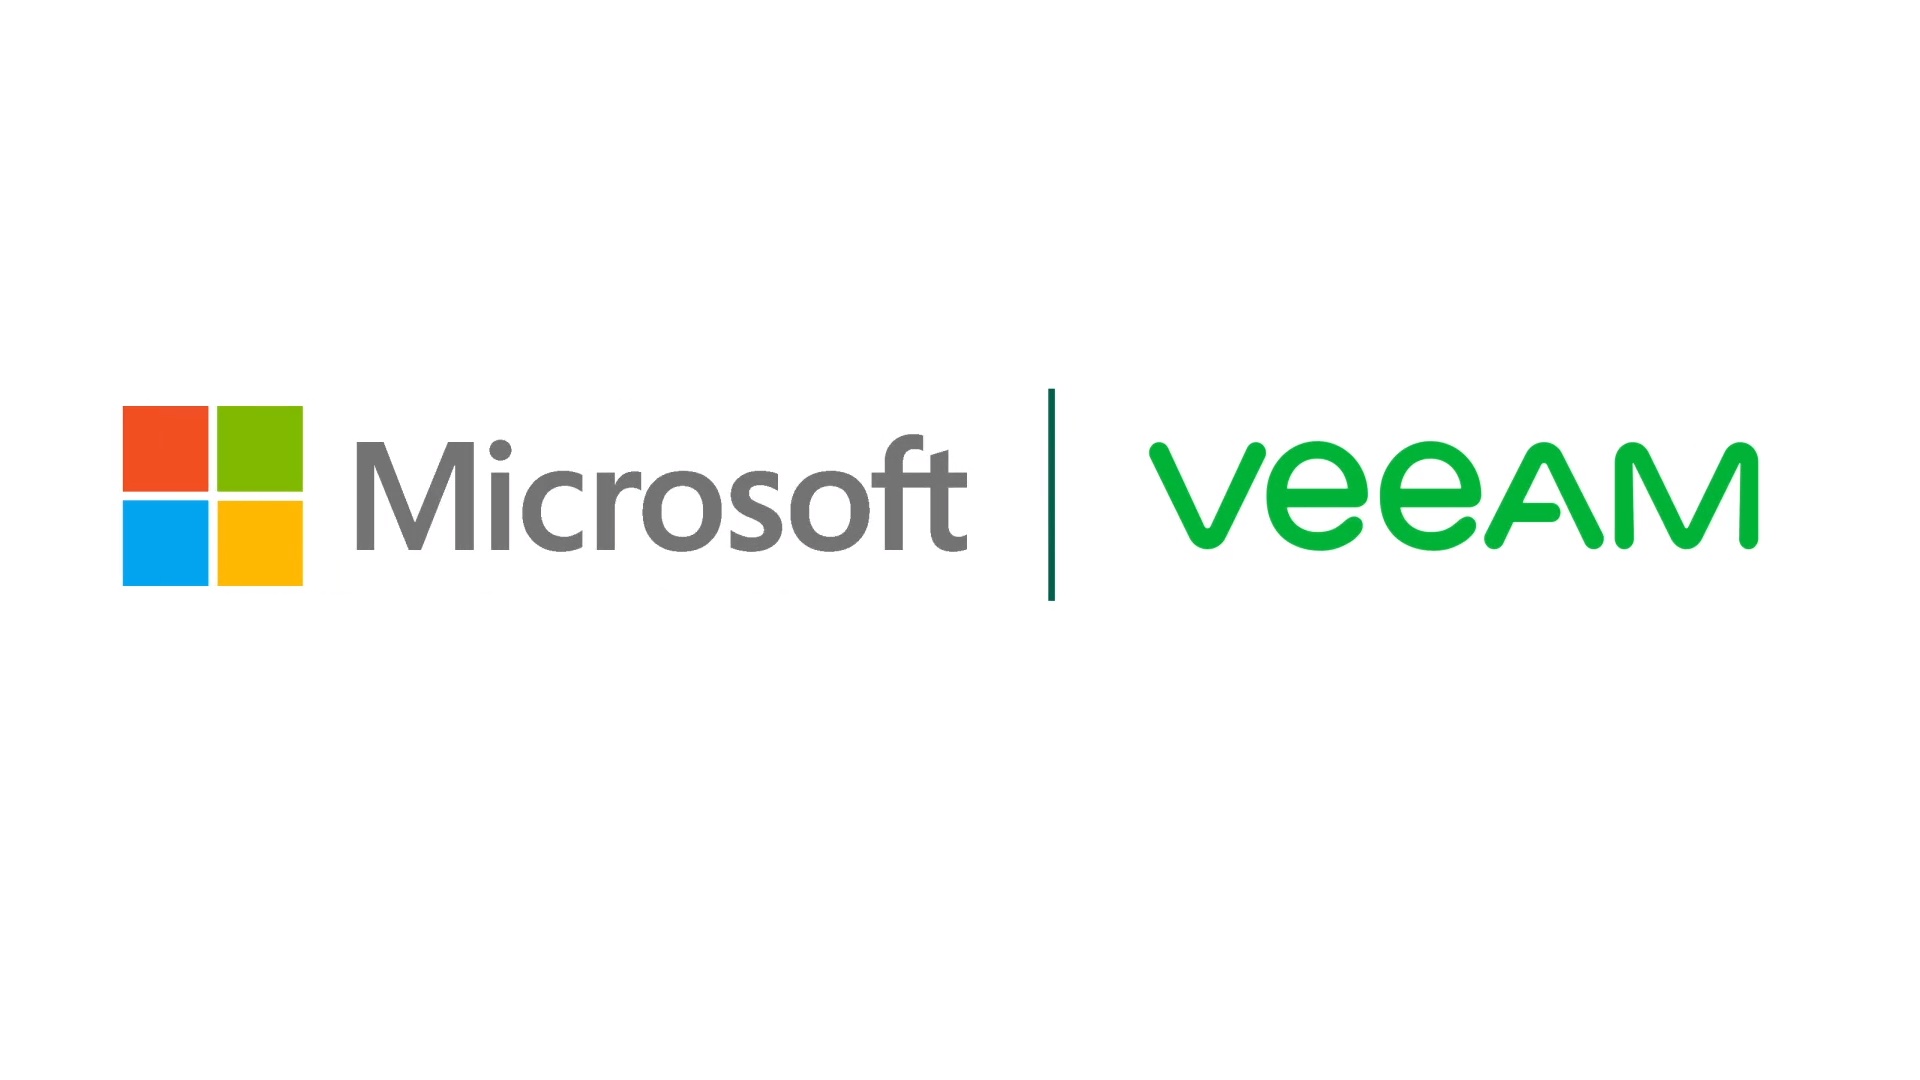 Mark Russinovich on the Veeam + Microsoft Partnership